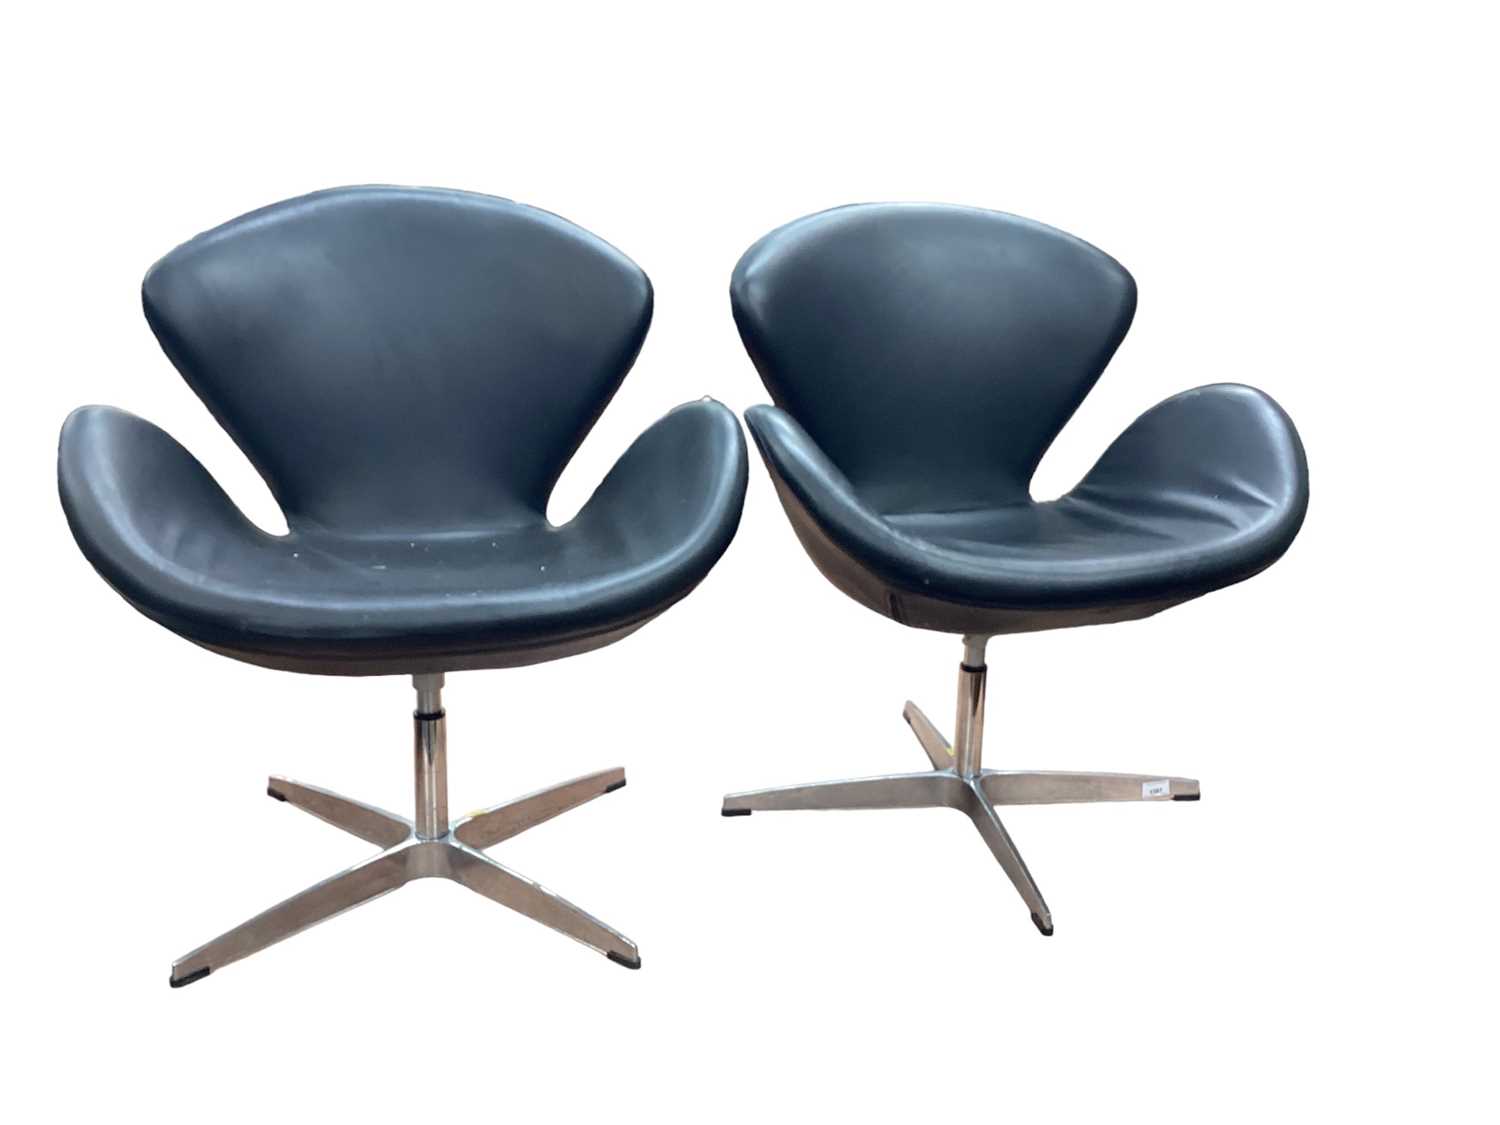 Pair of stylish swivel chairs